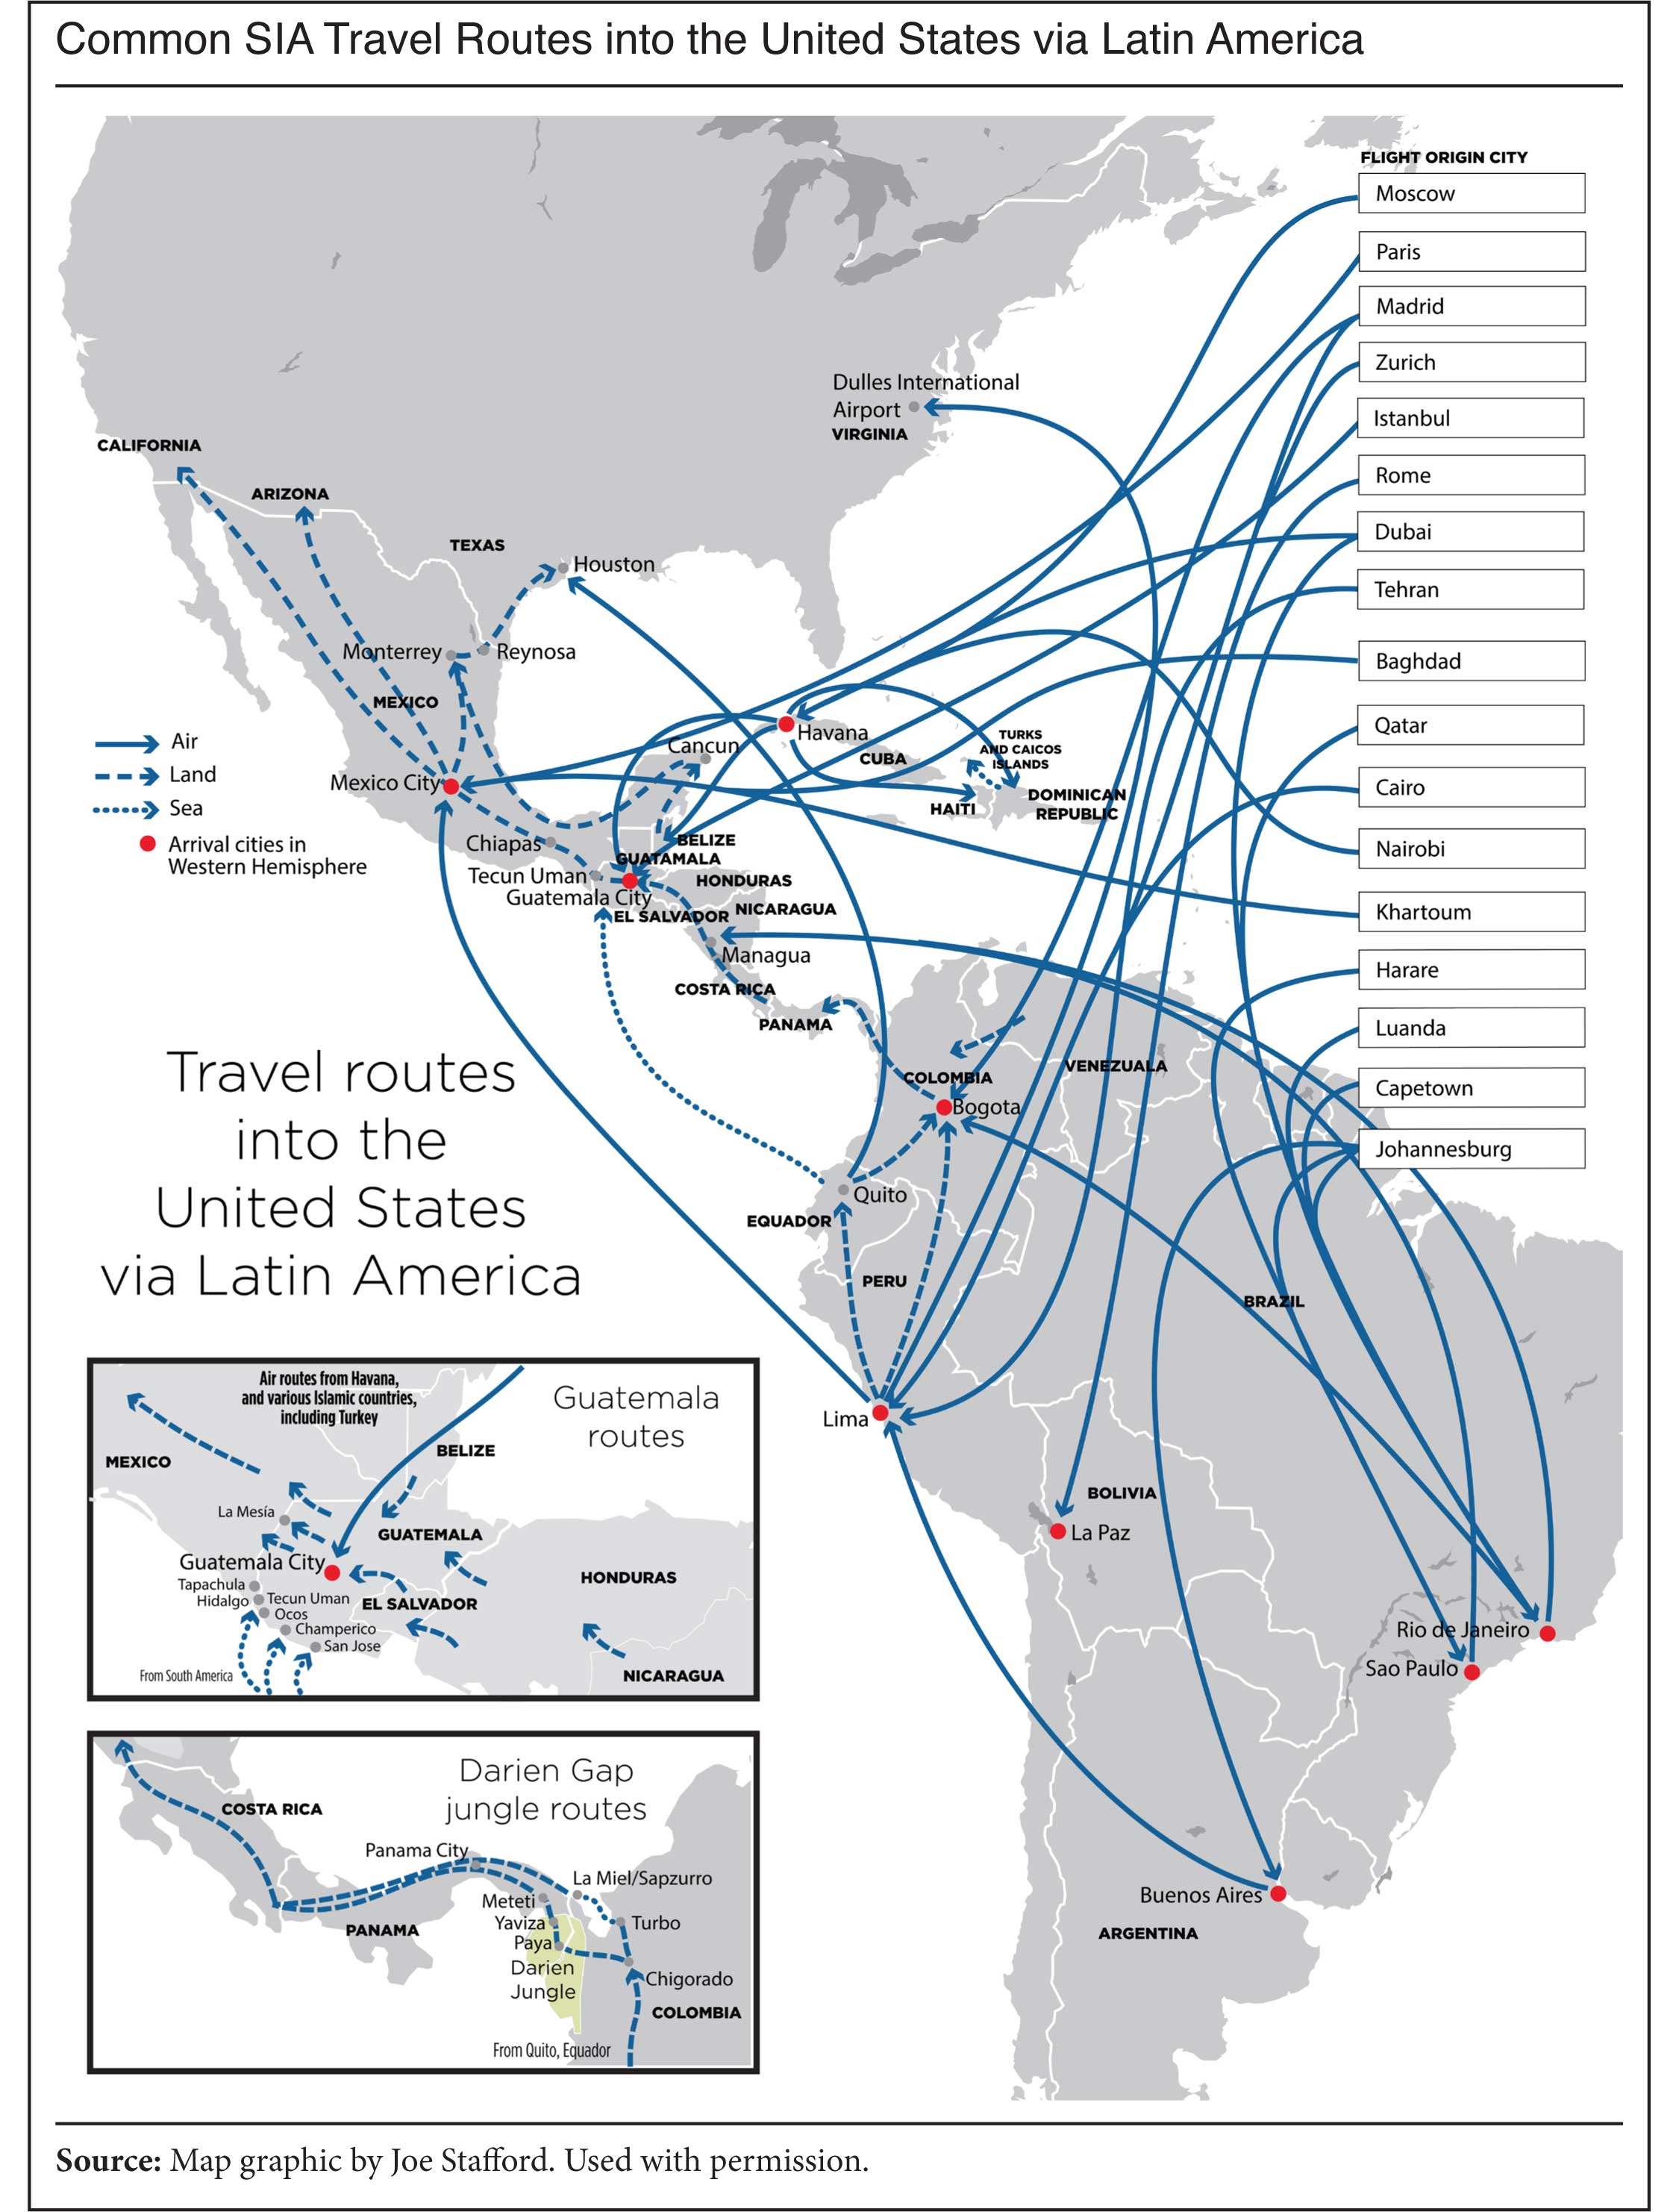 Map: Common SIA Travel Routes into the United States via Latin America